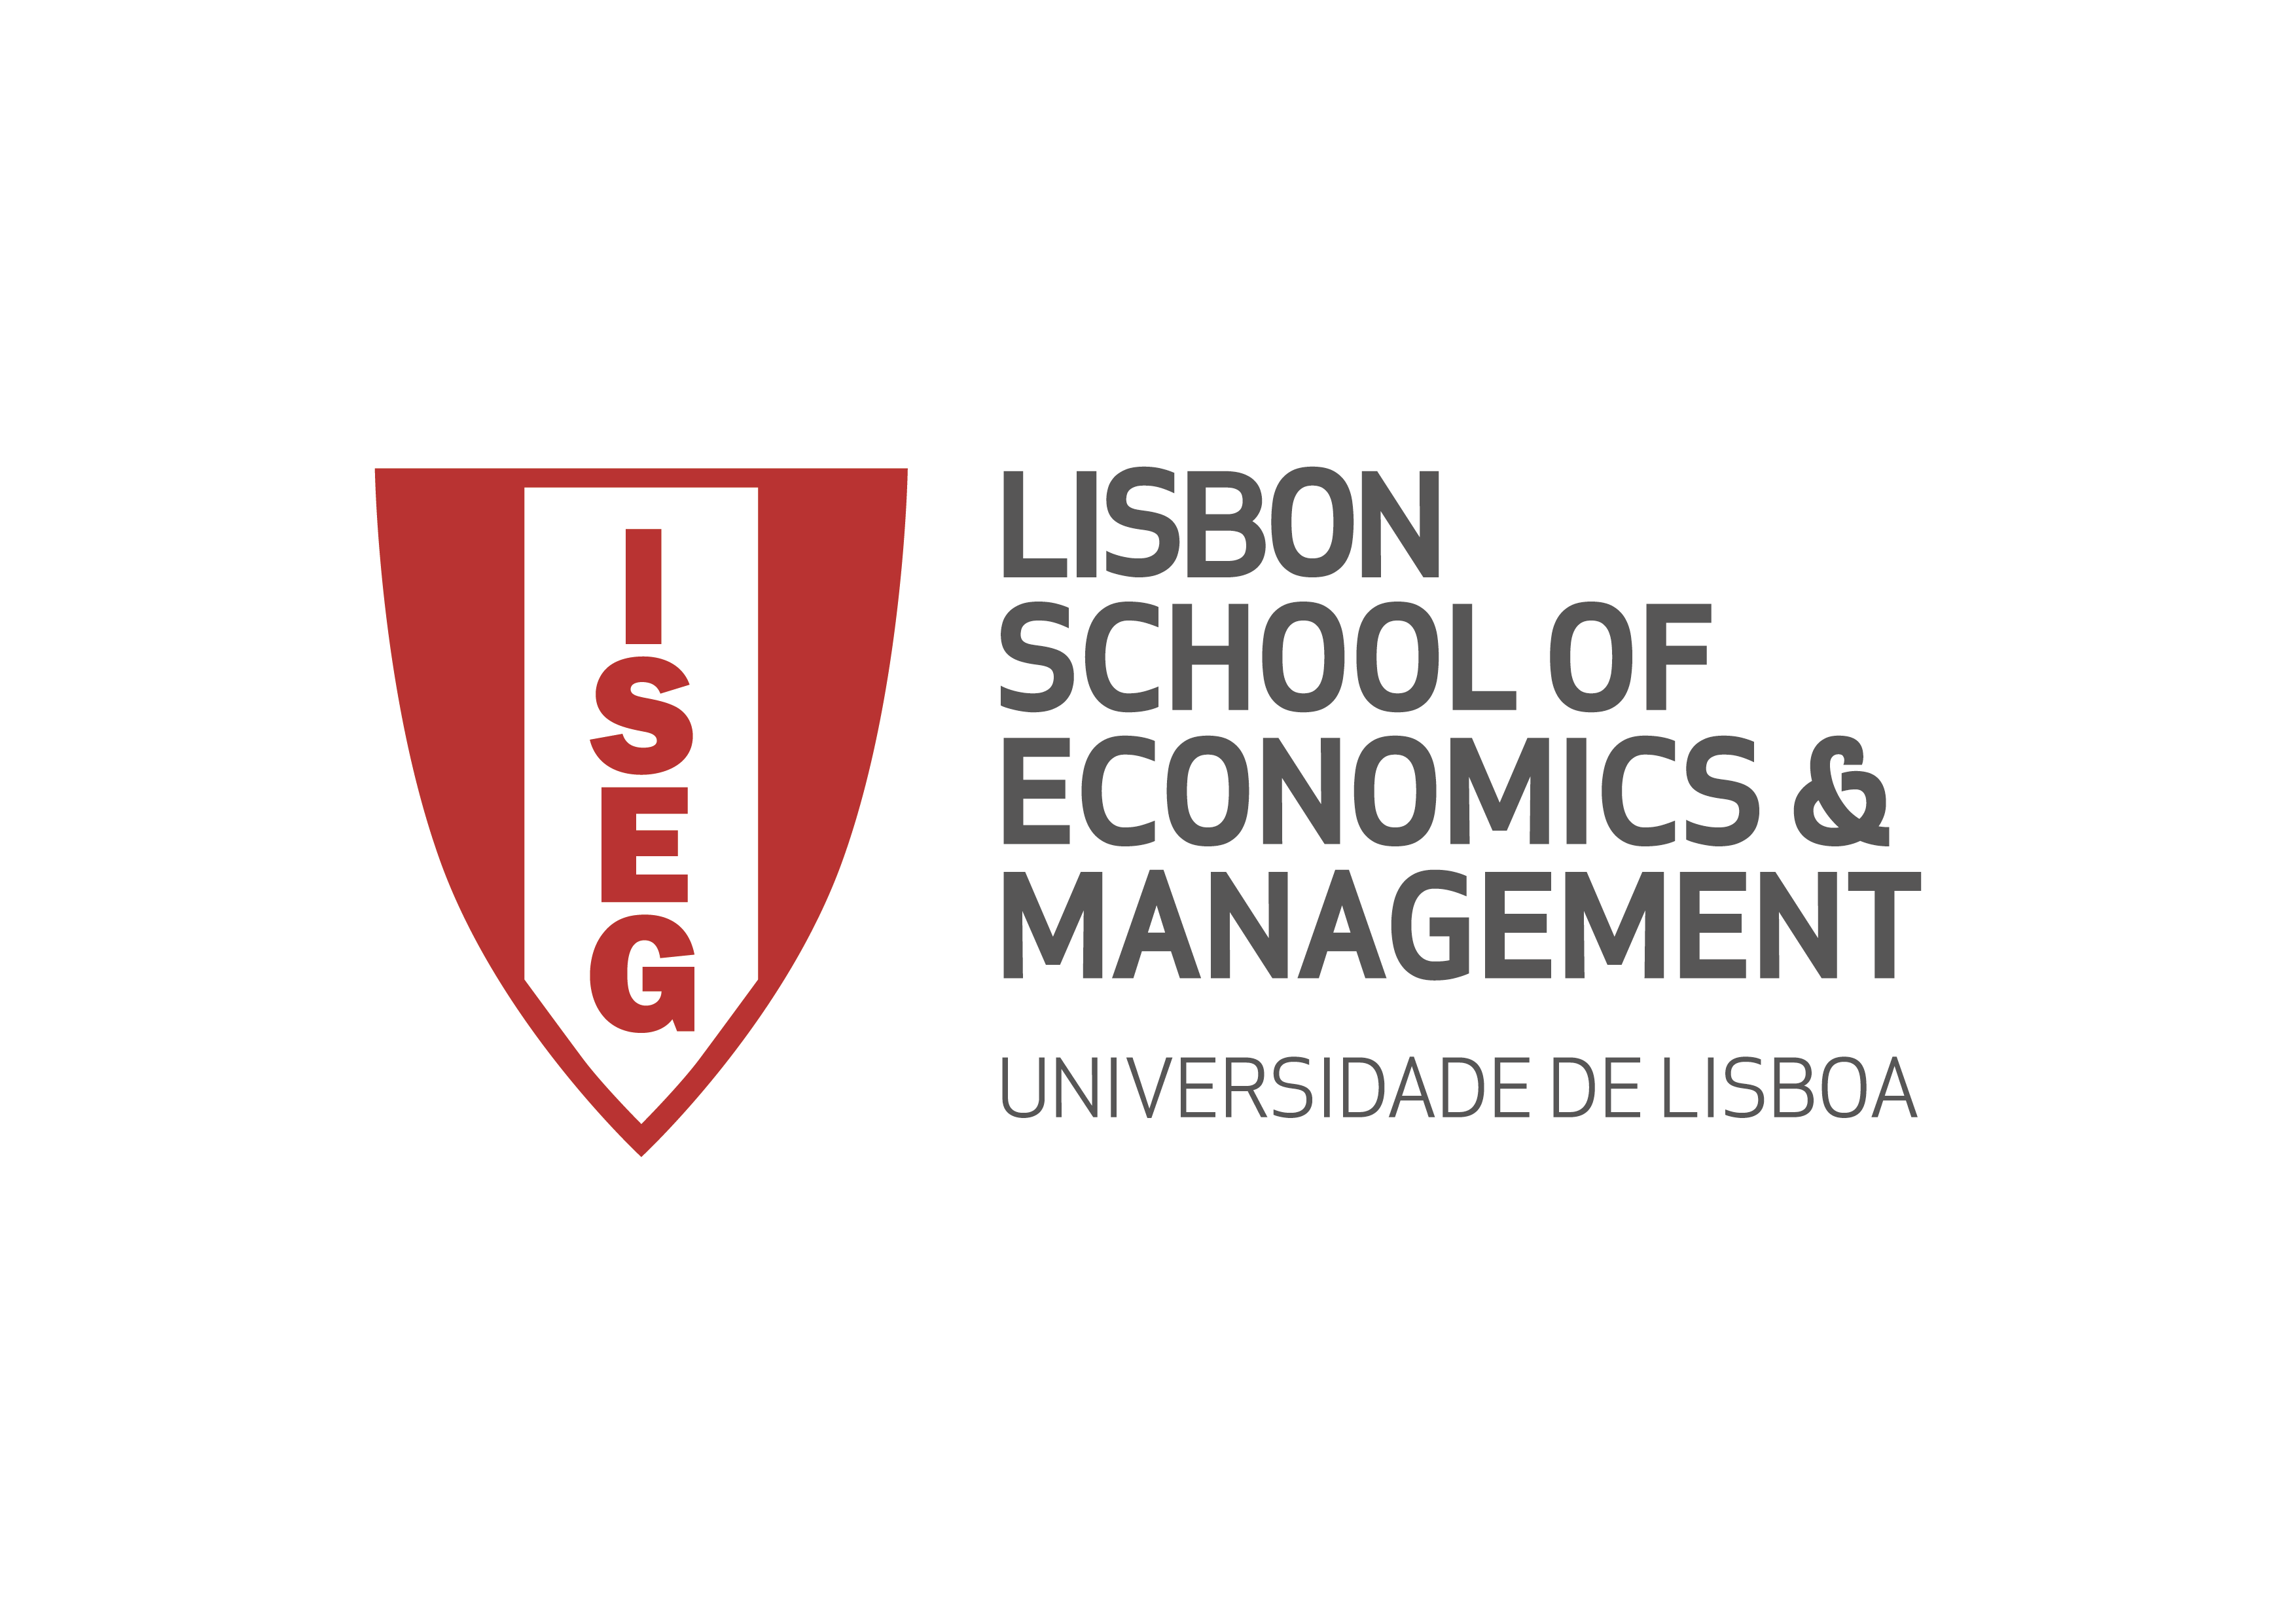 Lisbon School Of Economics & Management (ISEG)